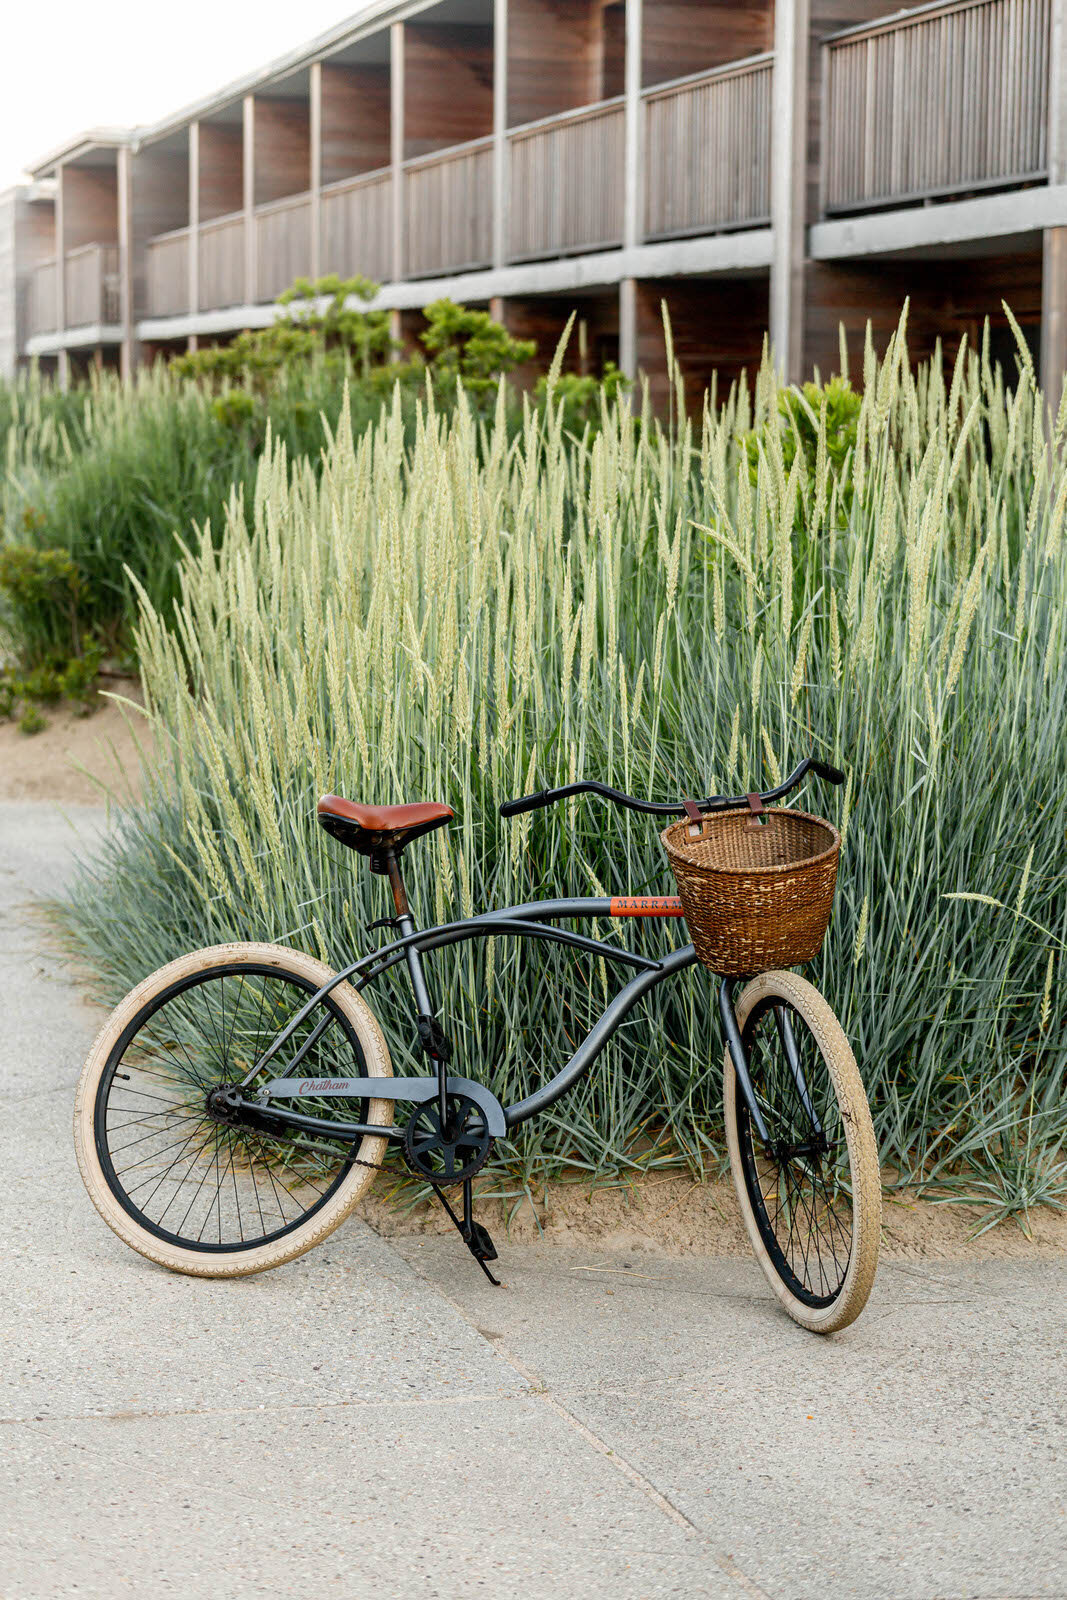 Bike-by-hotel-grass